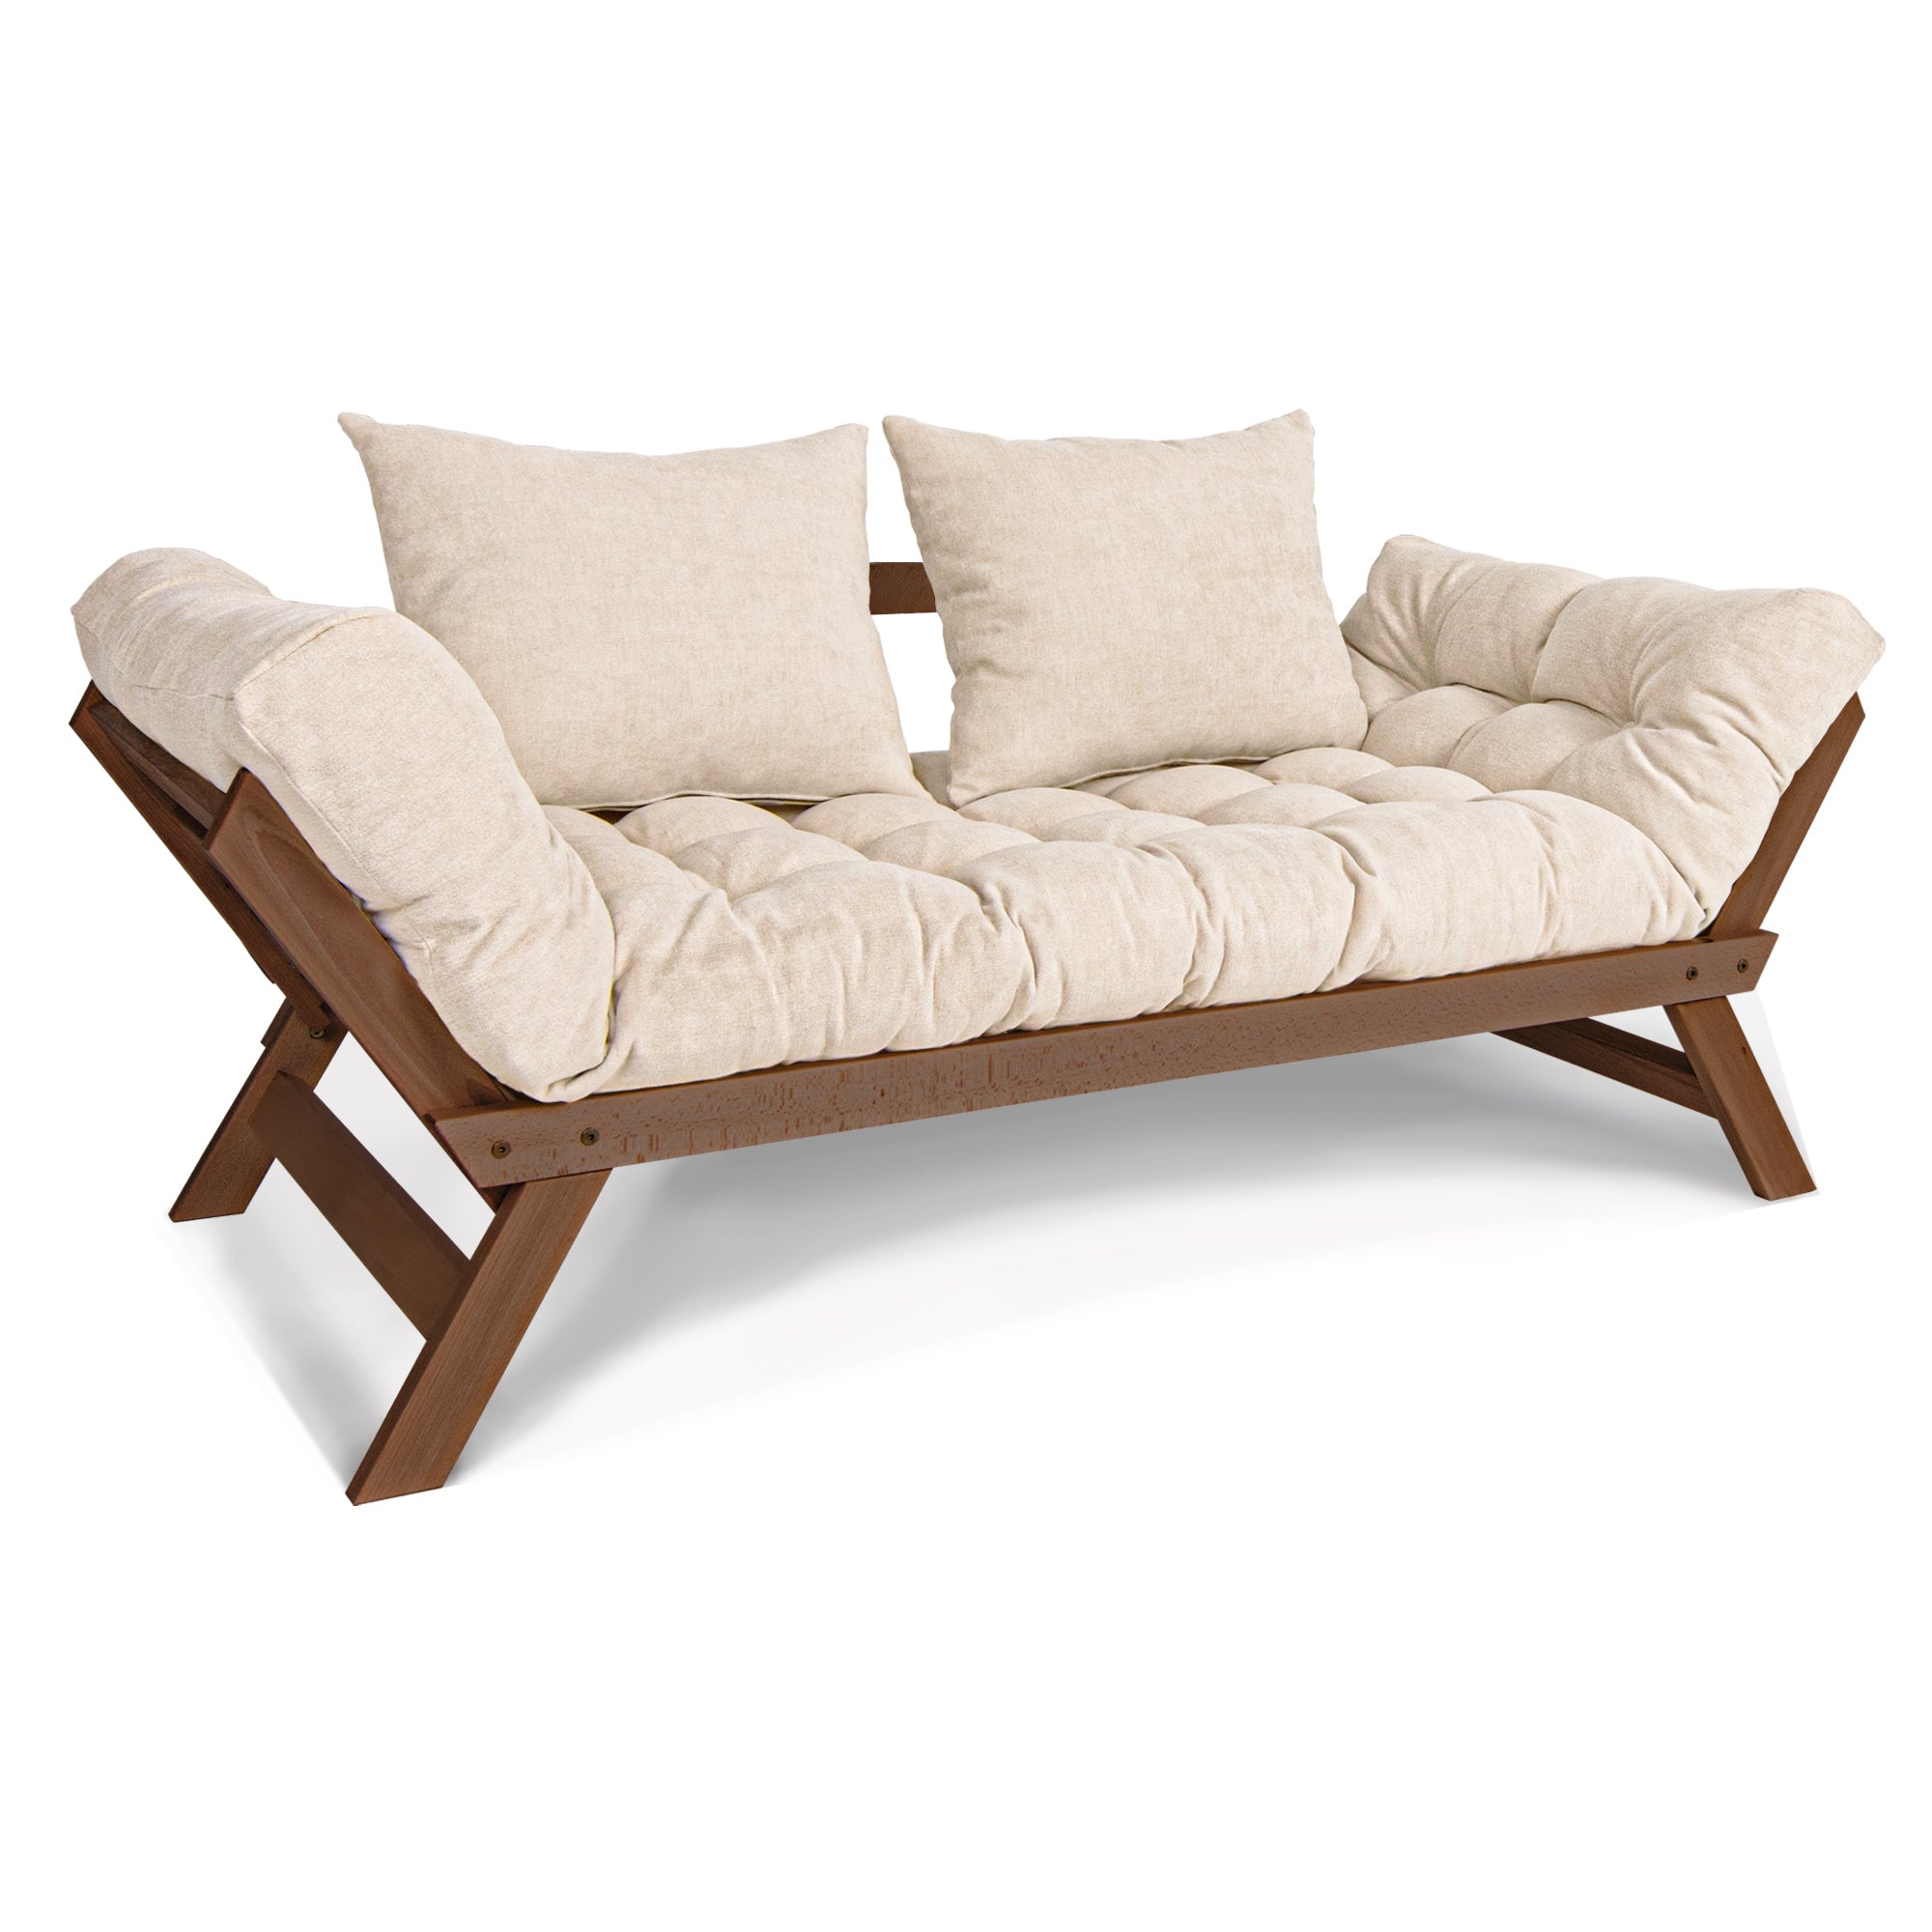 Folding Sofa Bed Allegro Beech Wood